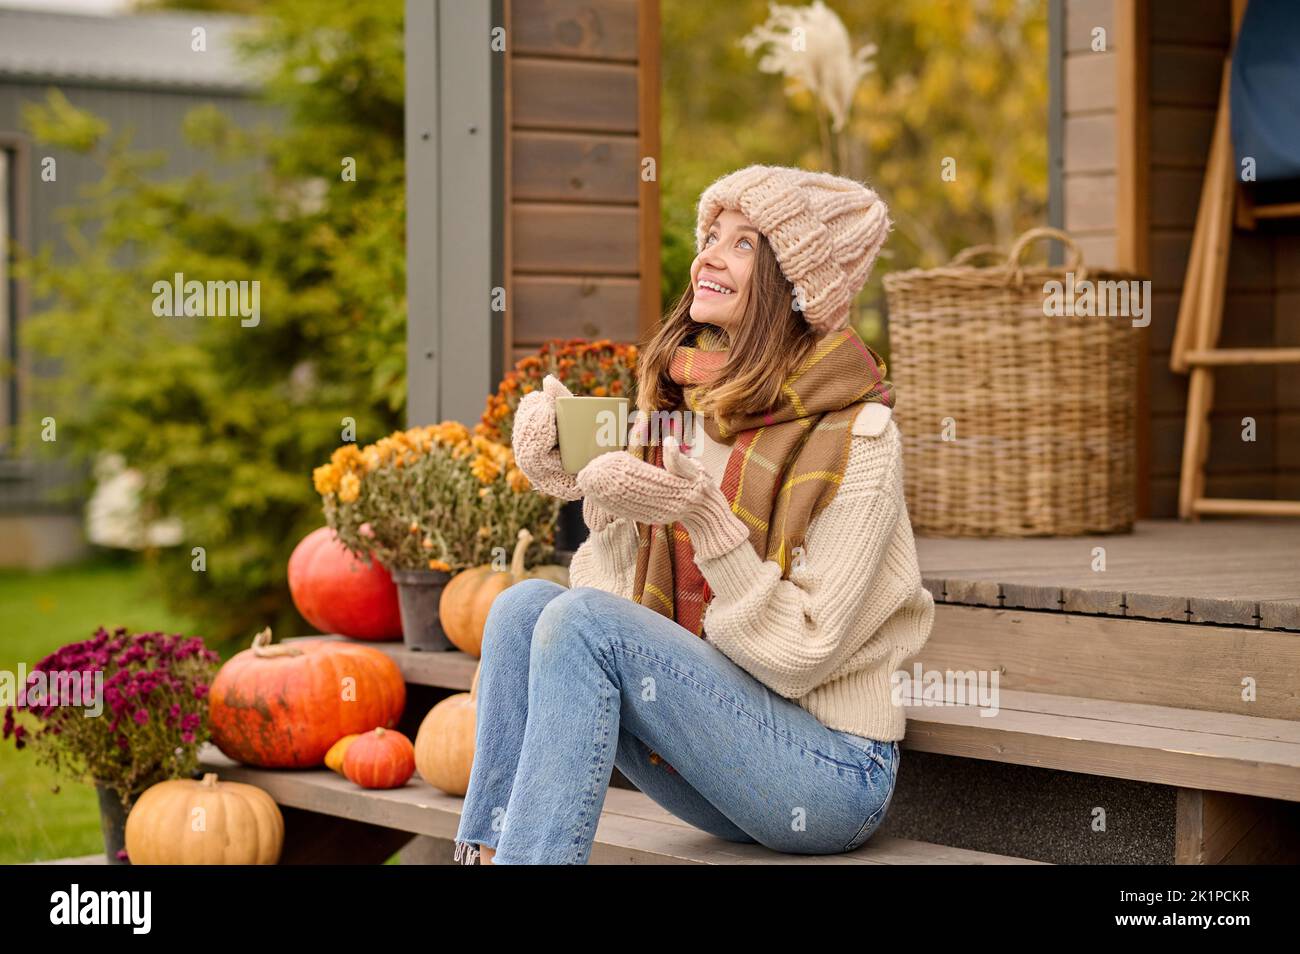 Allegra giovane femmina godendosi la sua pausa caffè sulla veranda Foto Stock